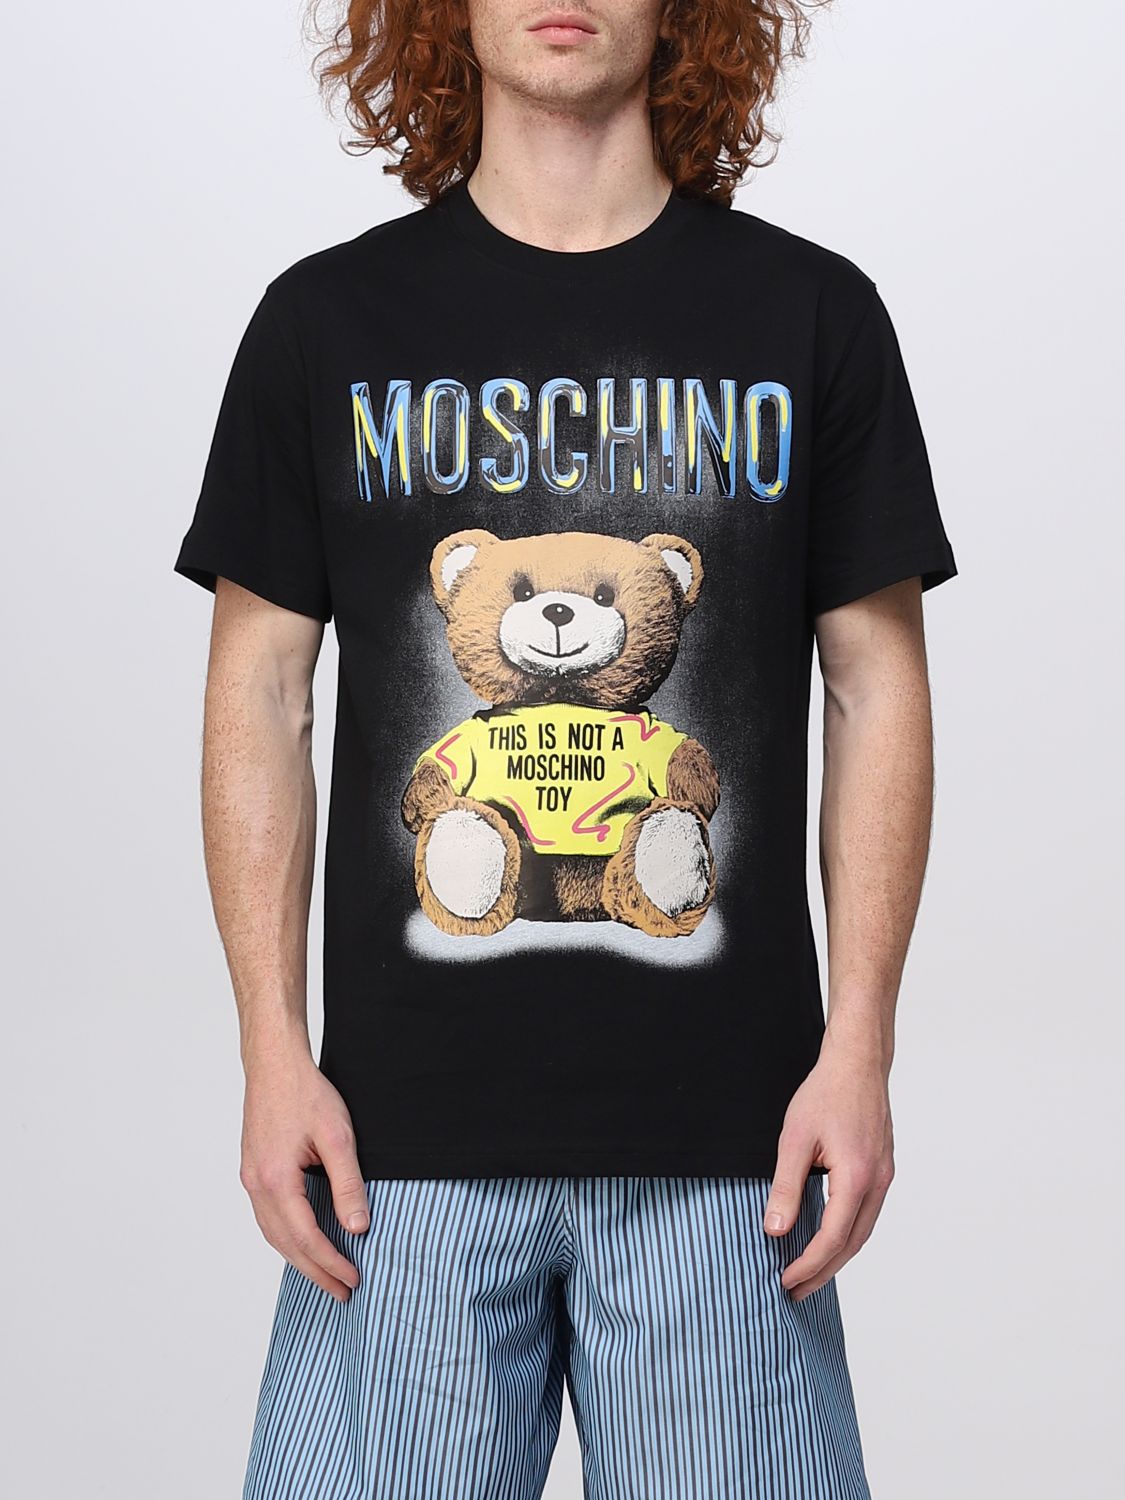 MOSCHINO COUTURE: Camiseta para hombre, Negro Camiseta 0733241 línea en GIGLIO.COM